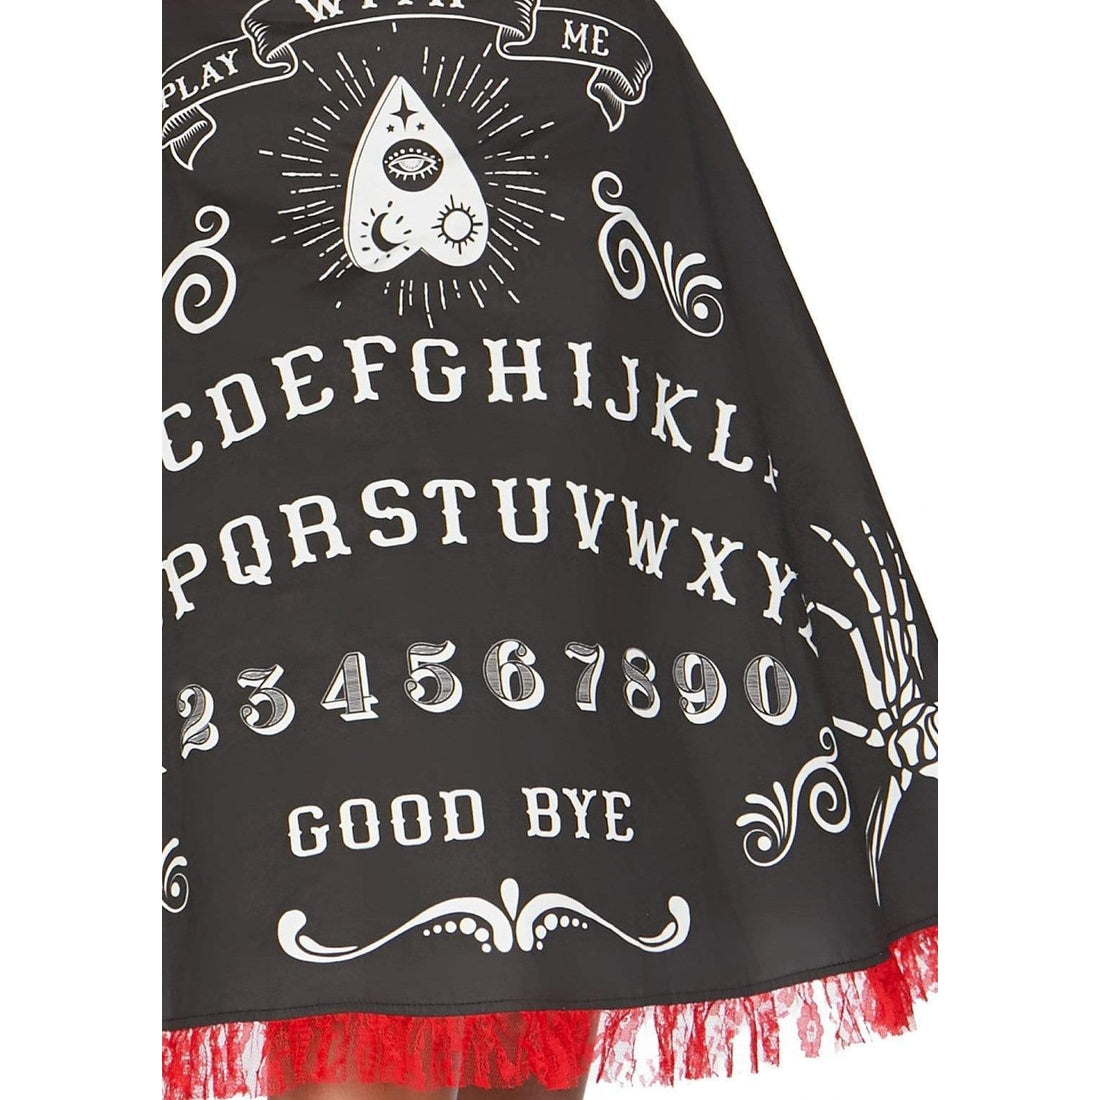 Ouija Board Beauty Costume in Size S, M, or L